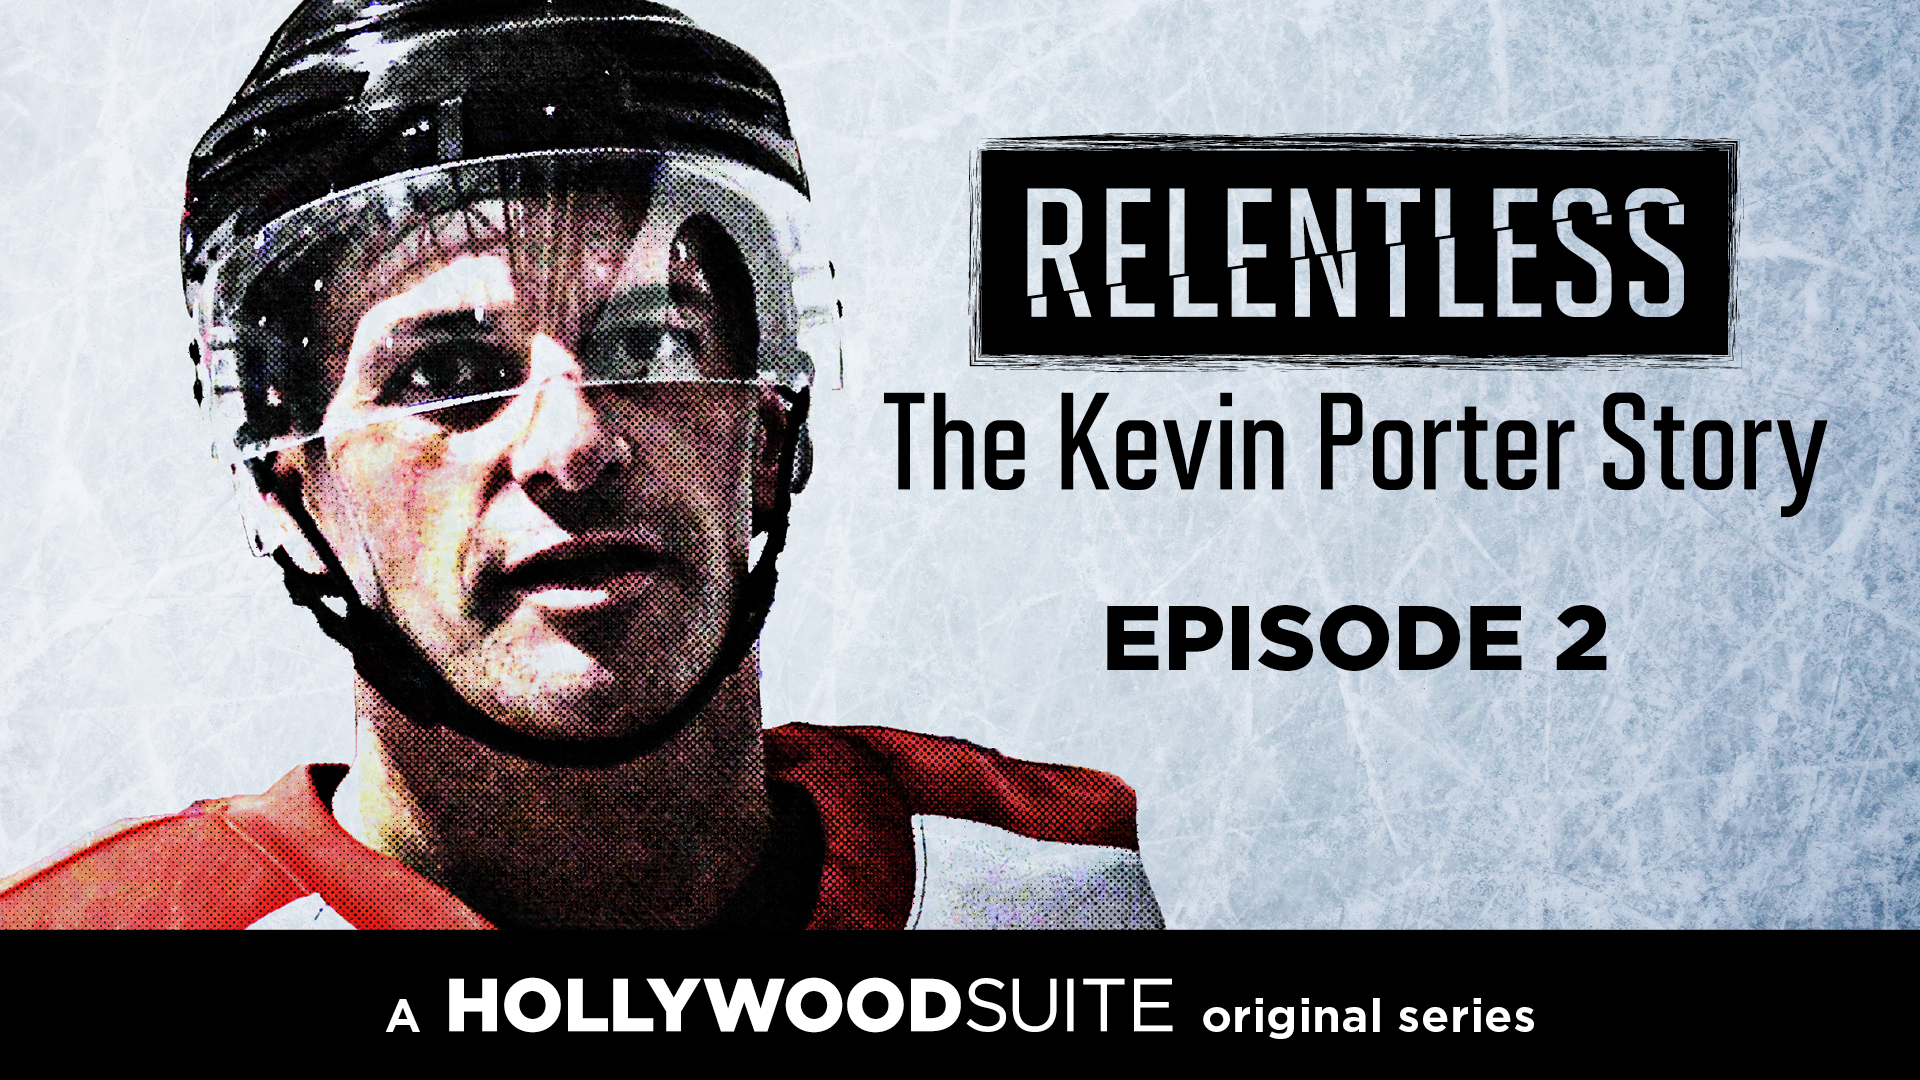 Relentless: The Kevin Porter Story